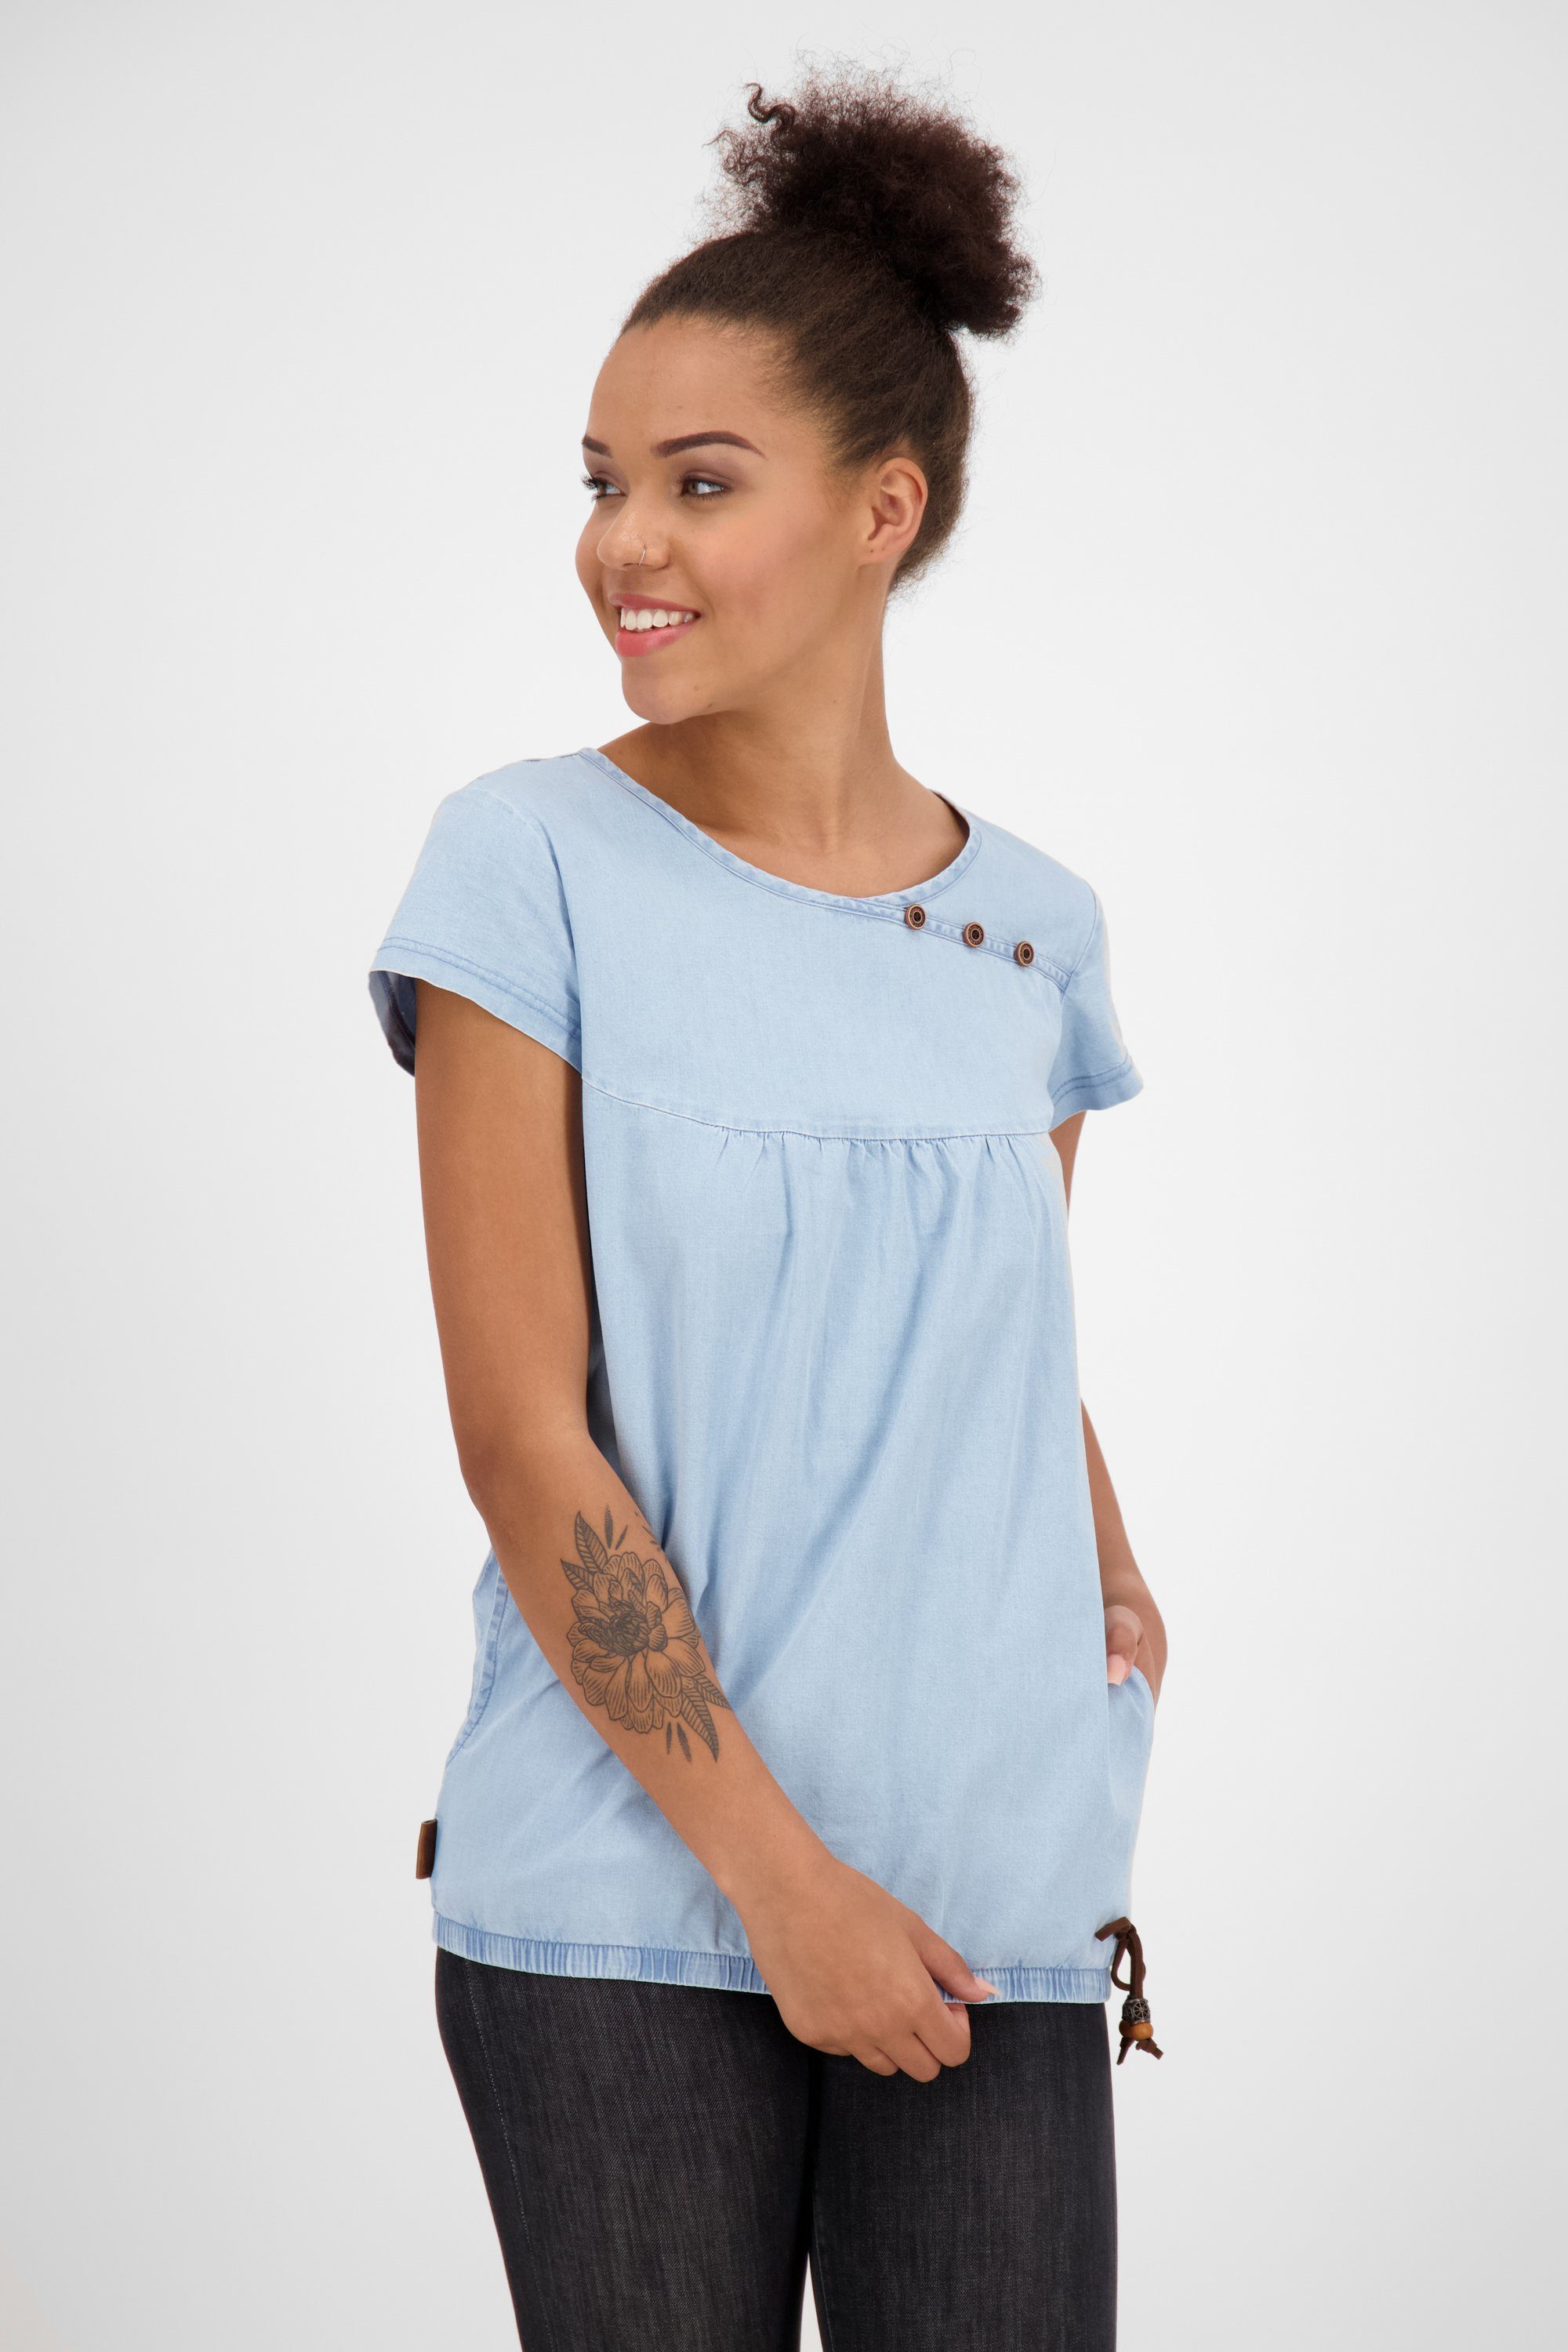 Neuer Versandhandel Alife & Kickin T-Shirt SummerAK denim Shirt Damen DNM light